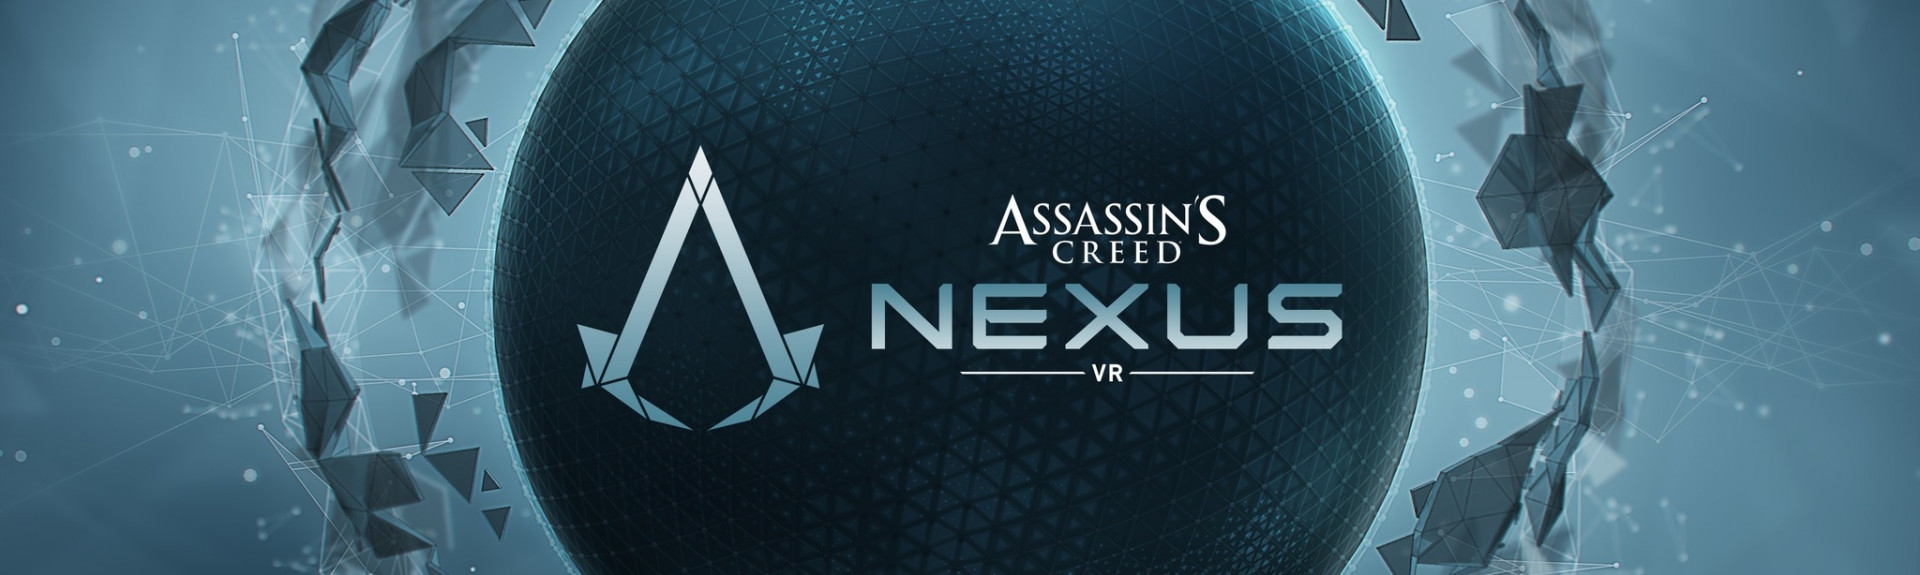 Assassin's Creed Nexus VR: ANÁLISIS